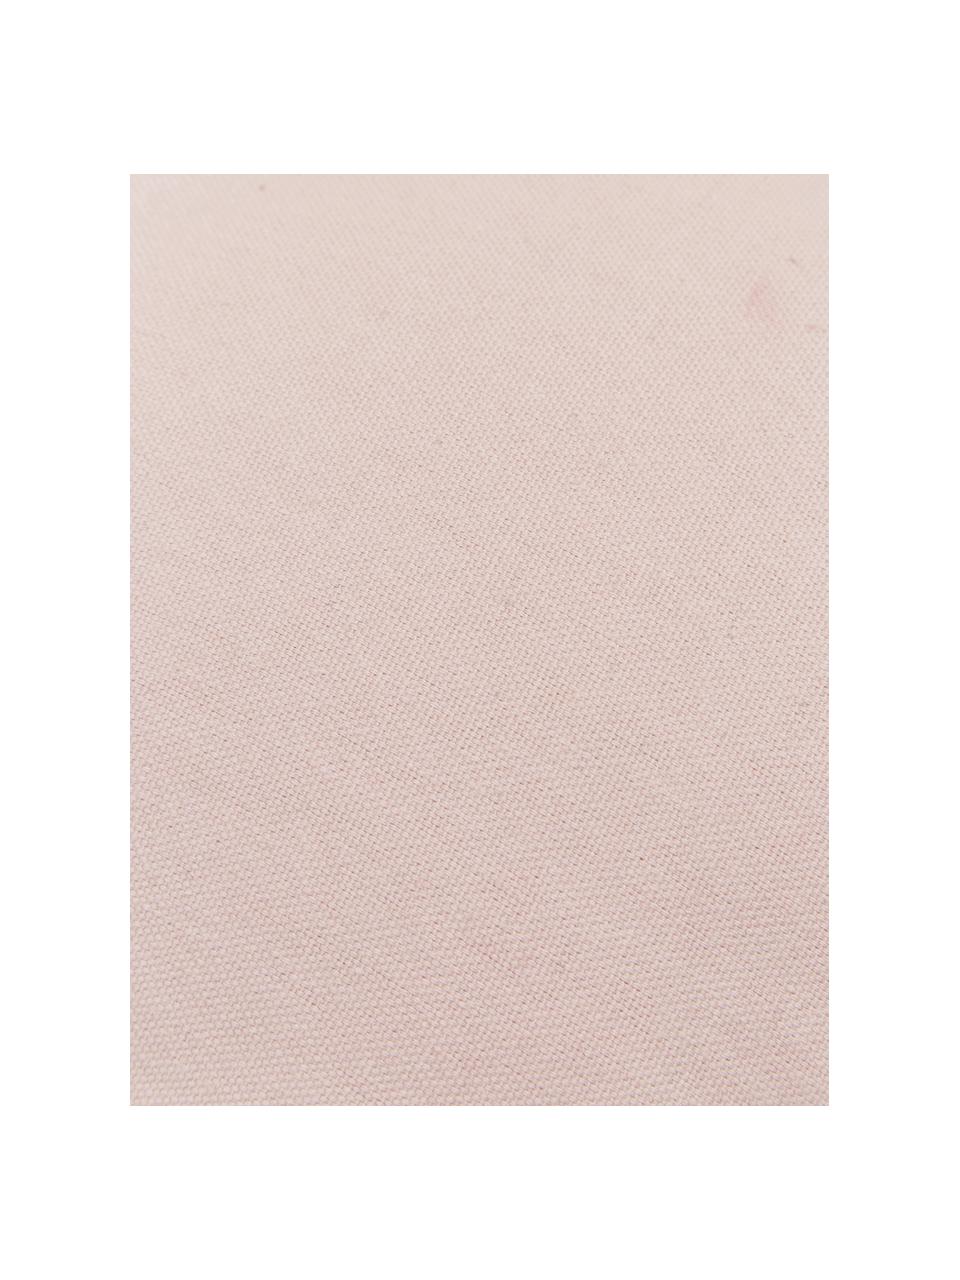 Cojín de punto grueso Sparkle, con relleno, Funda: 100% algodón, Rosa, An 45 x L 45 cm